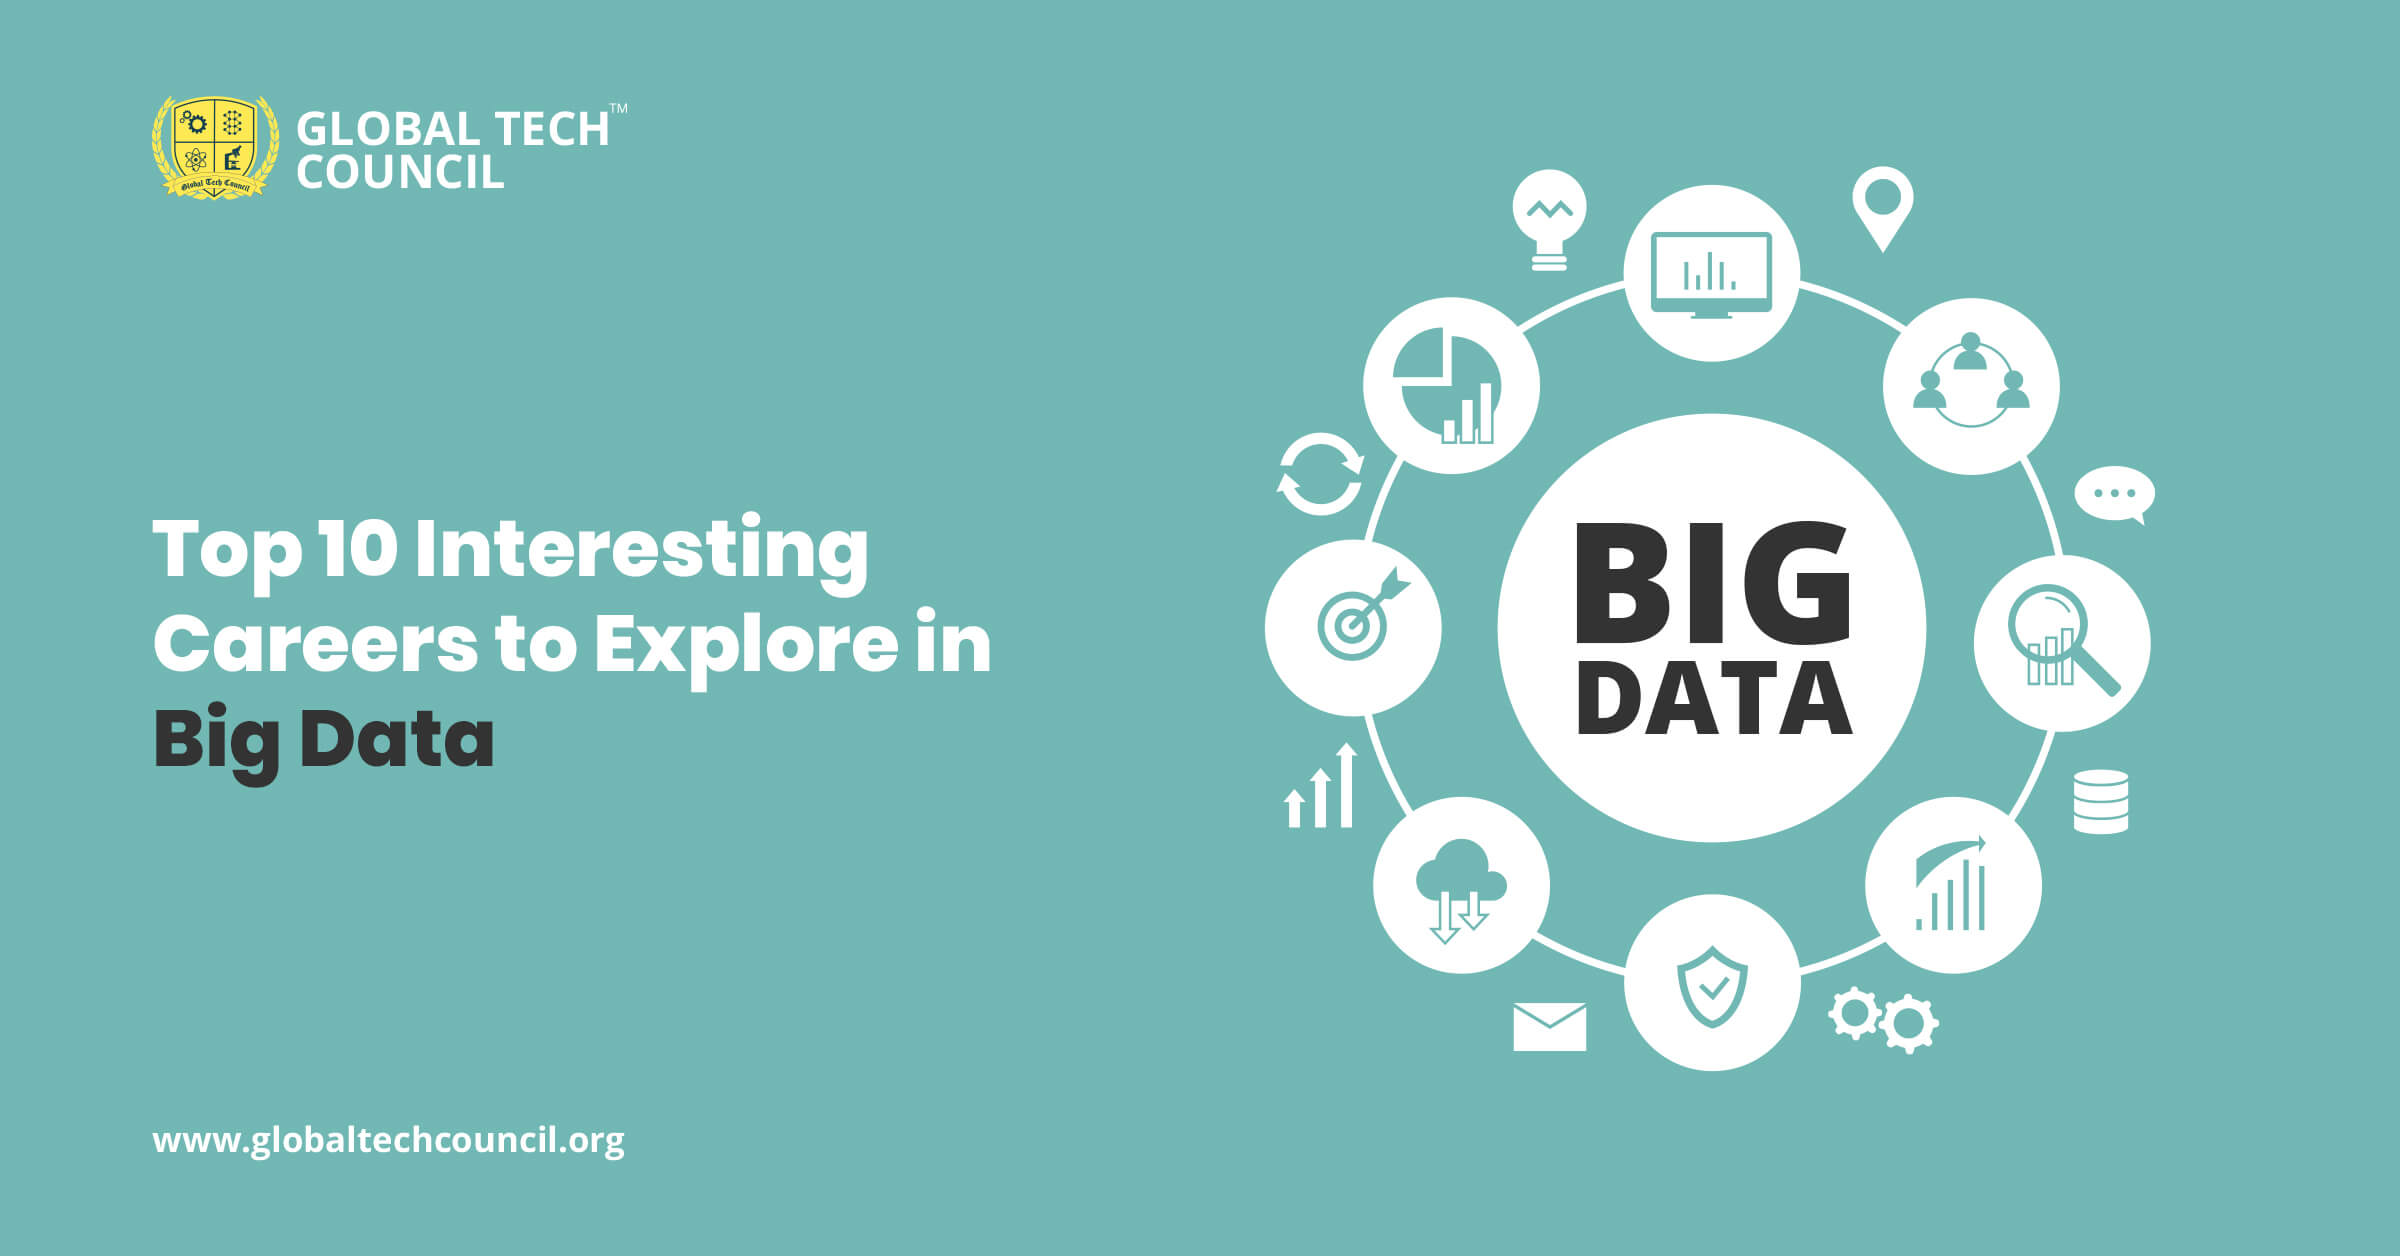 Top 10 Interesting Careers to Explore in Big Data